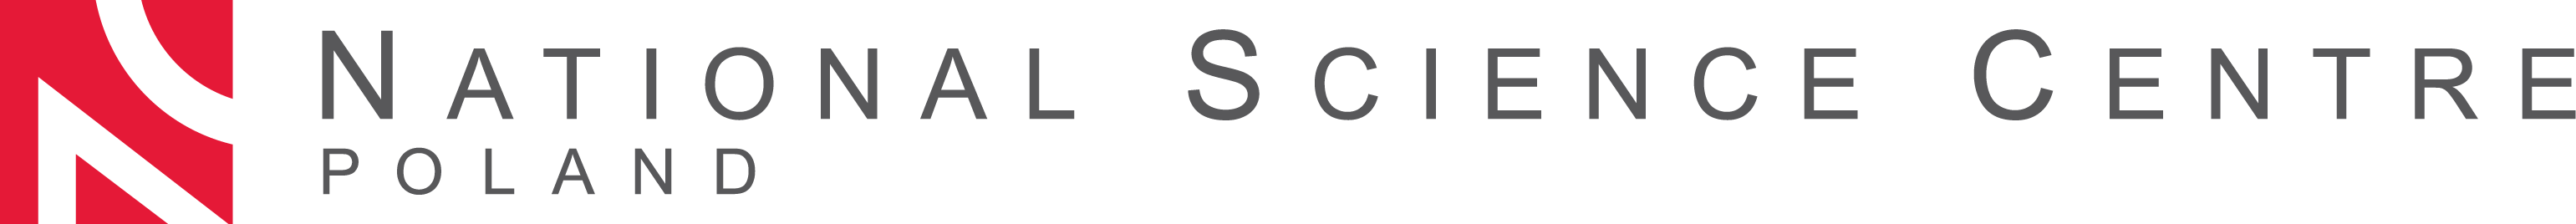 National Science Center, Poland Logo